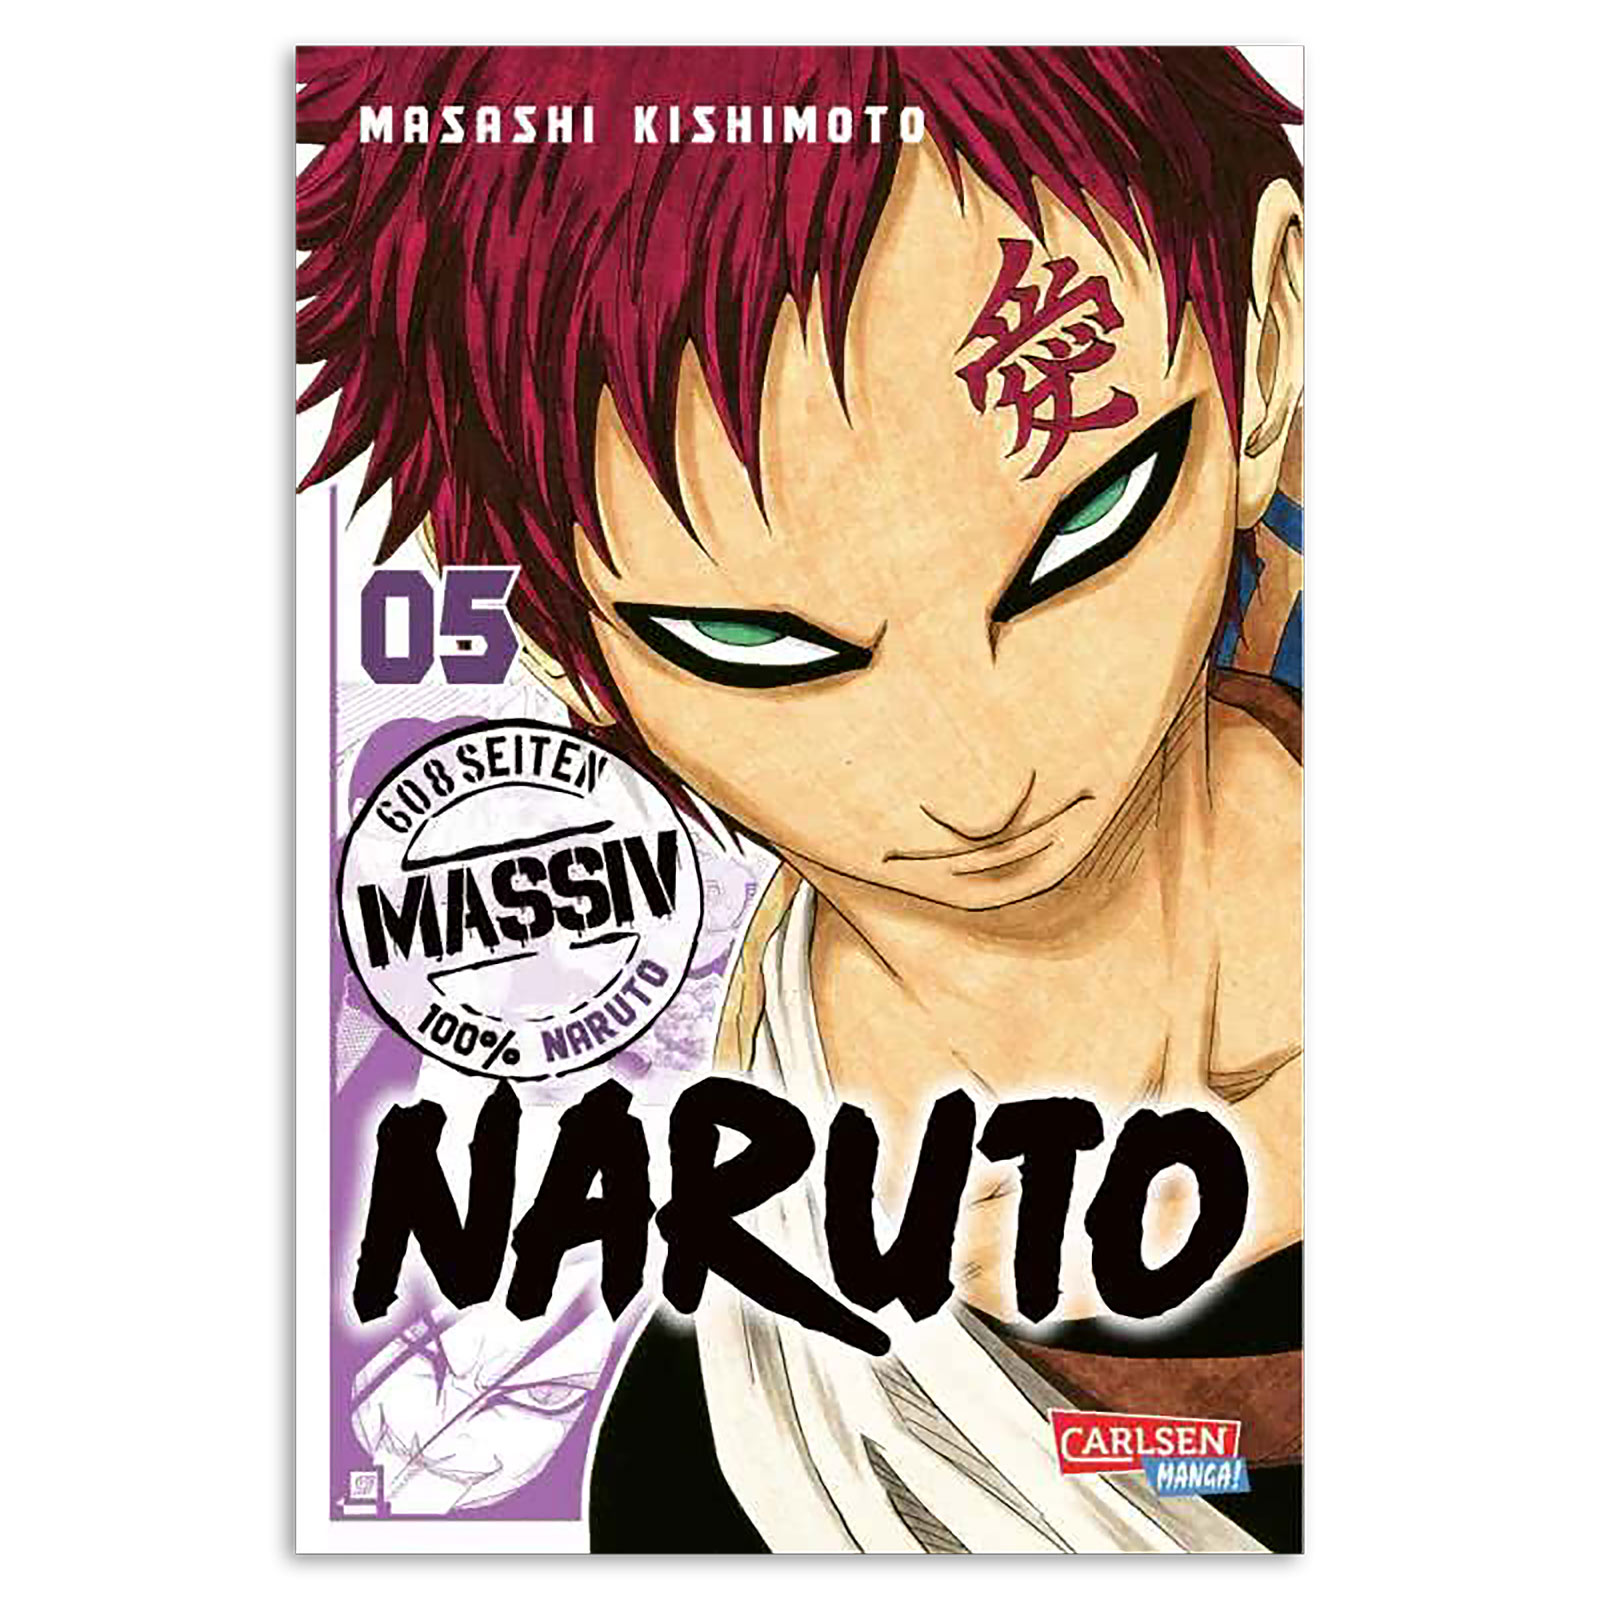 Naruto - Collection Volume 5 Paperback